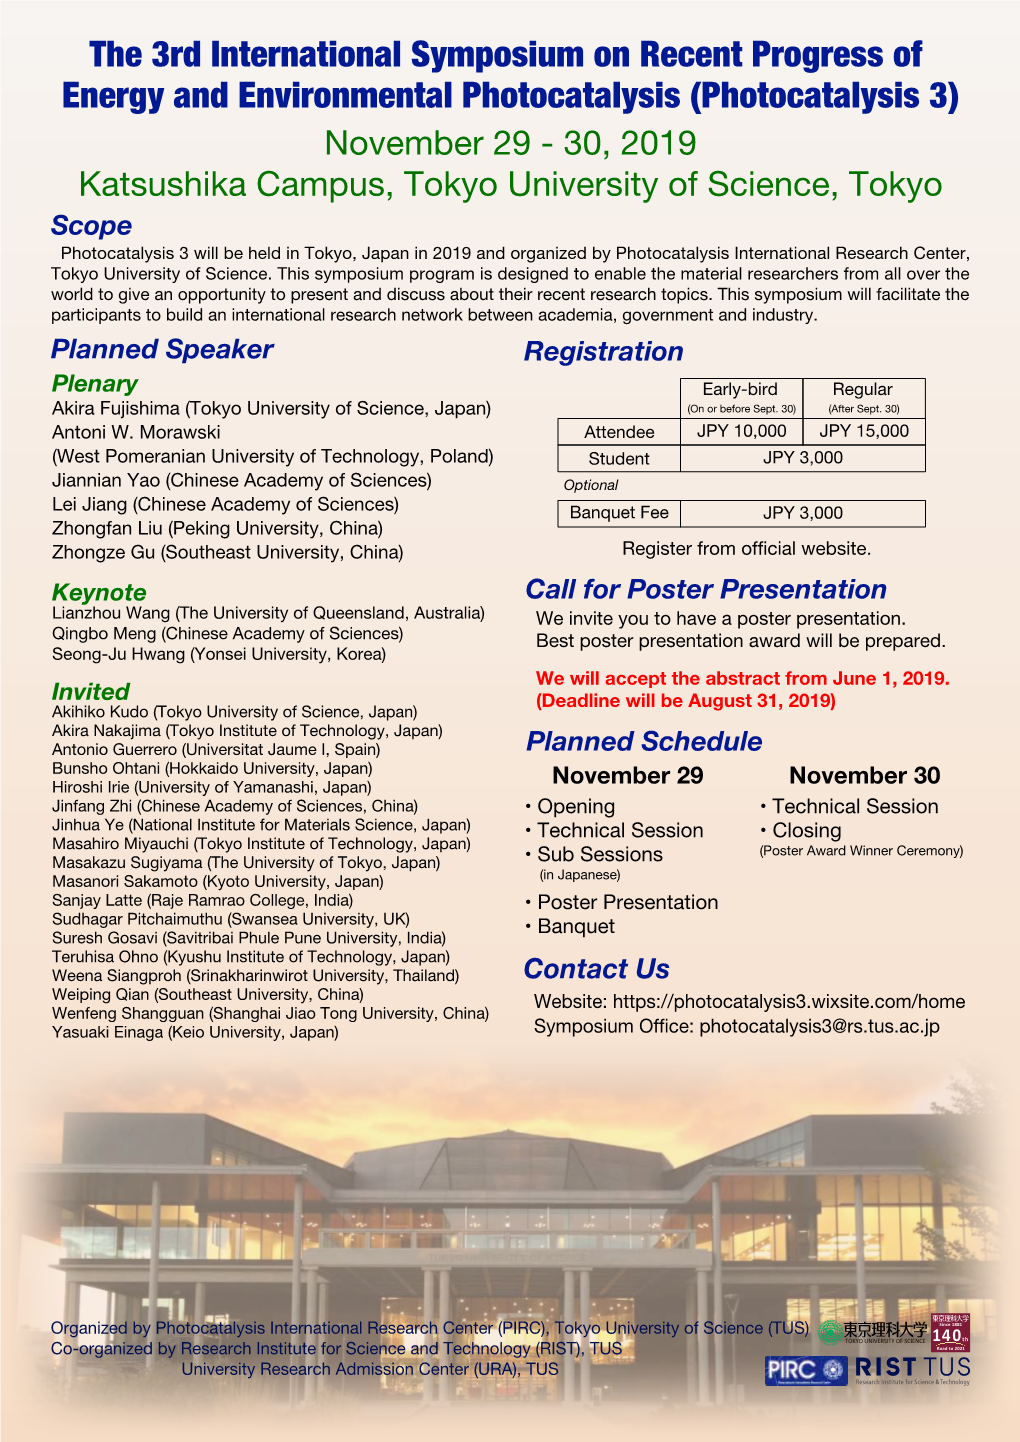 The 3Rd International Symposium on Recent Progress of Energy and Environmental Photocatalysis (Photocatalysis 3)